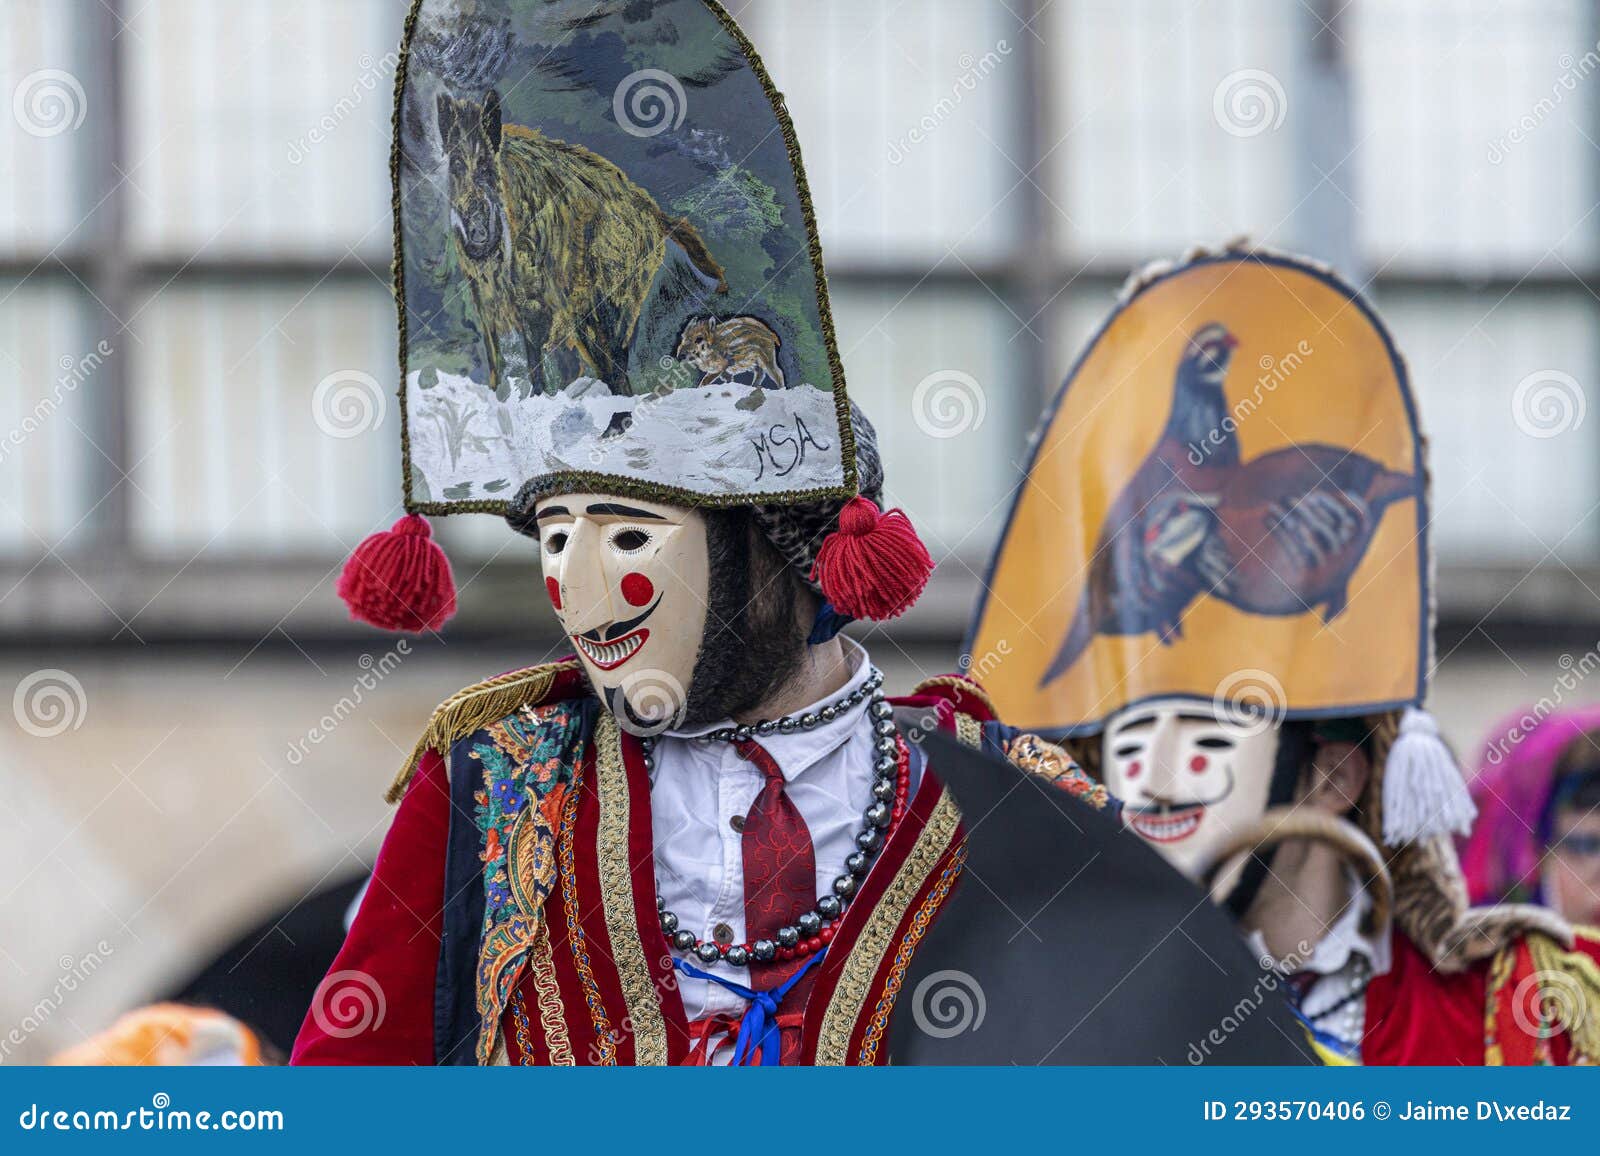 carnival of the felos of maceda, orense, spain